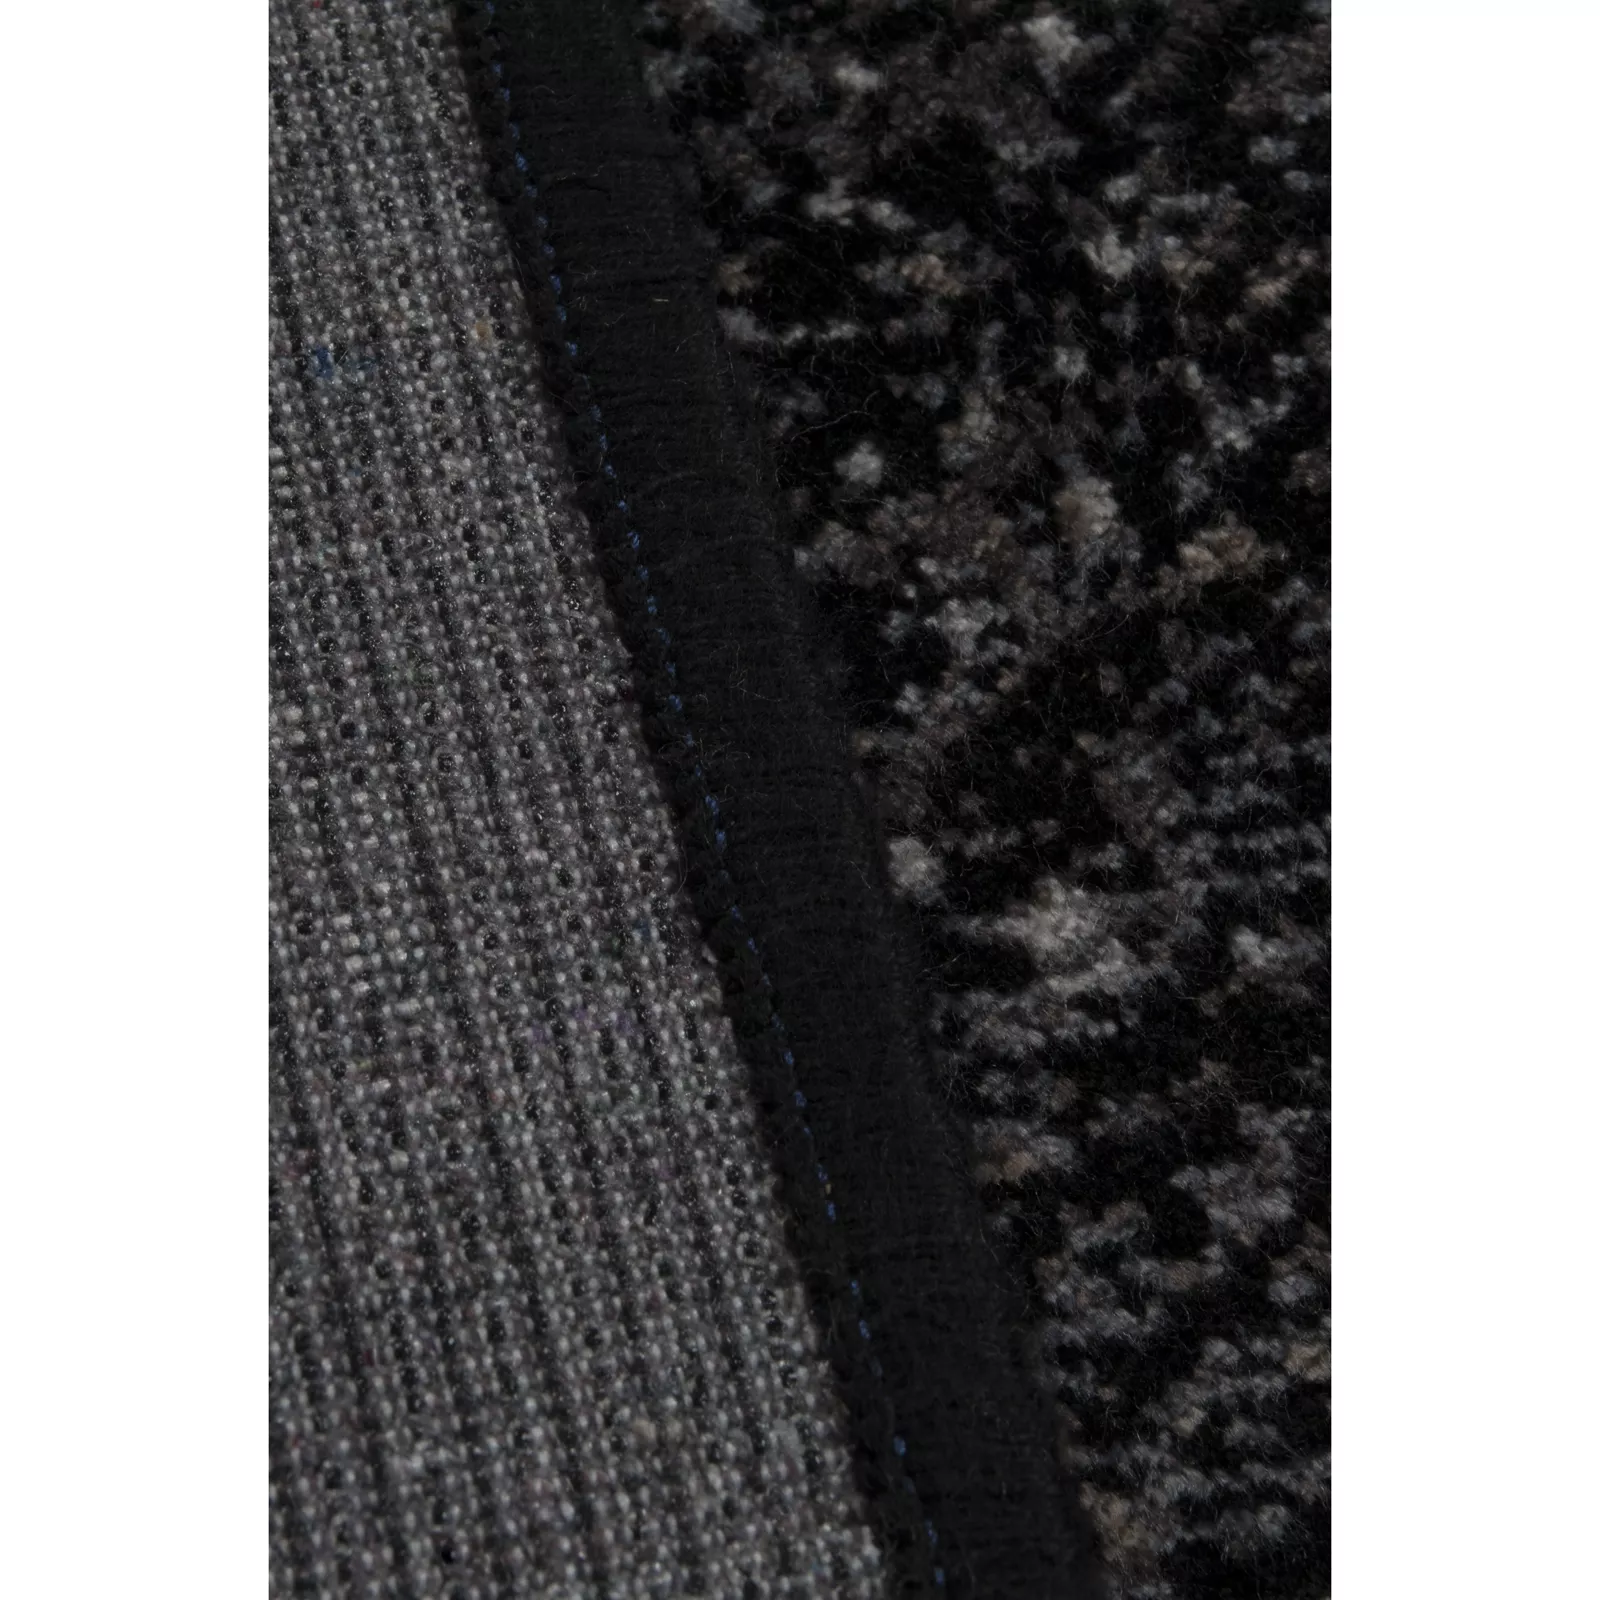 Vloerkleed (200x300cm) Rugged - Zwart/Grijs